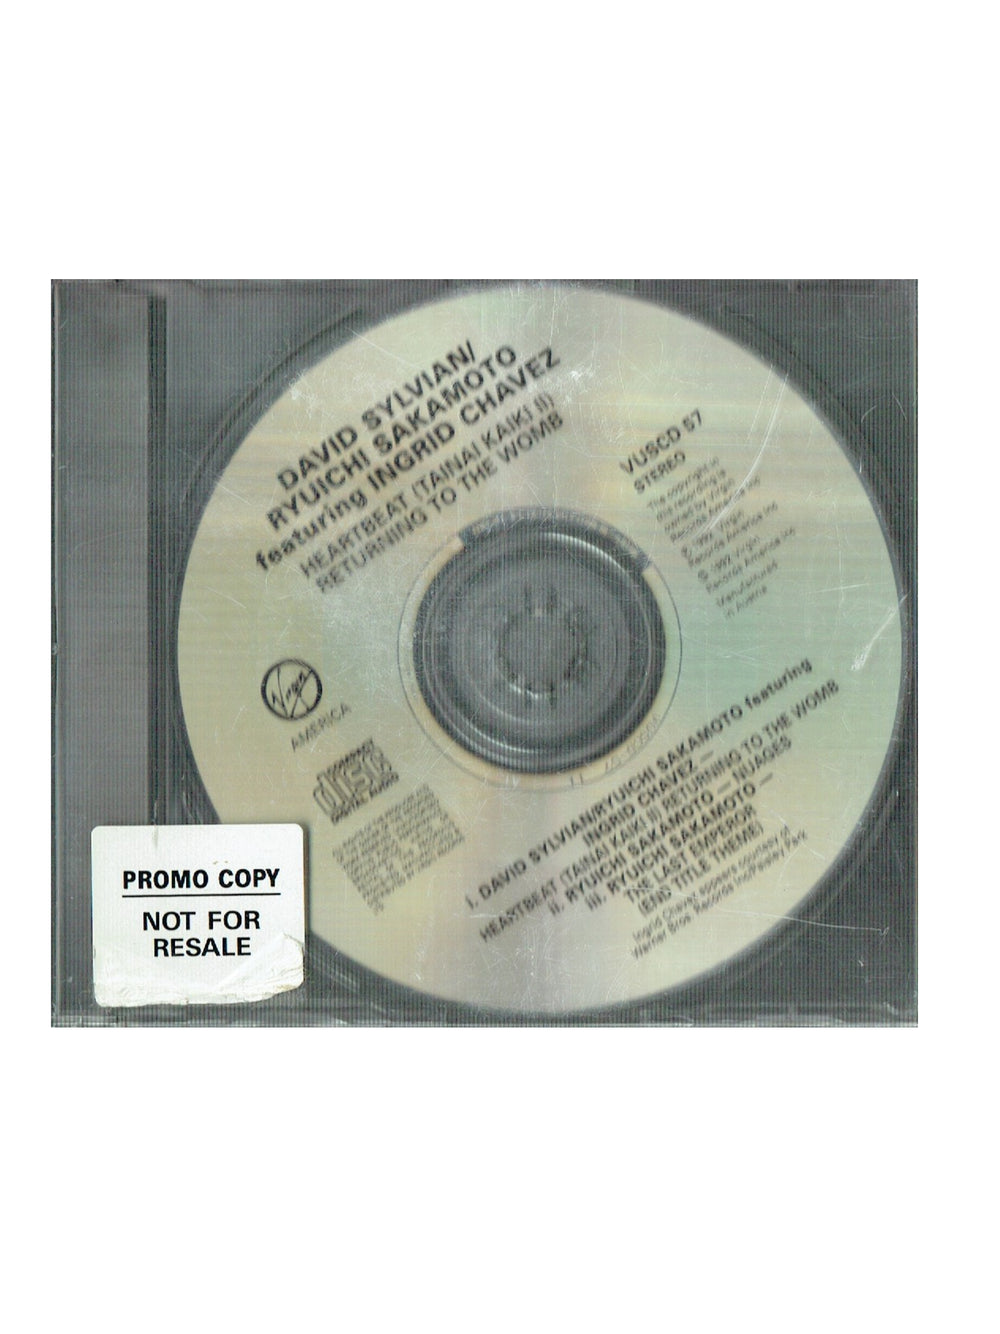 Prince – David Sylvian Ryuich Sakamoto Featuring Ingrid Chavez Heartbeat CD Single Promo Uk Preloved: 1992